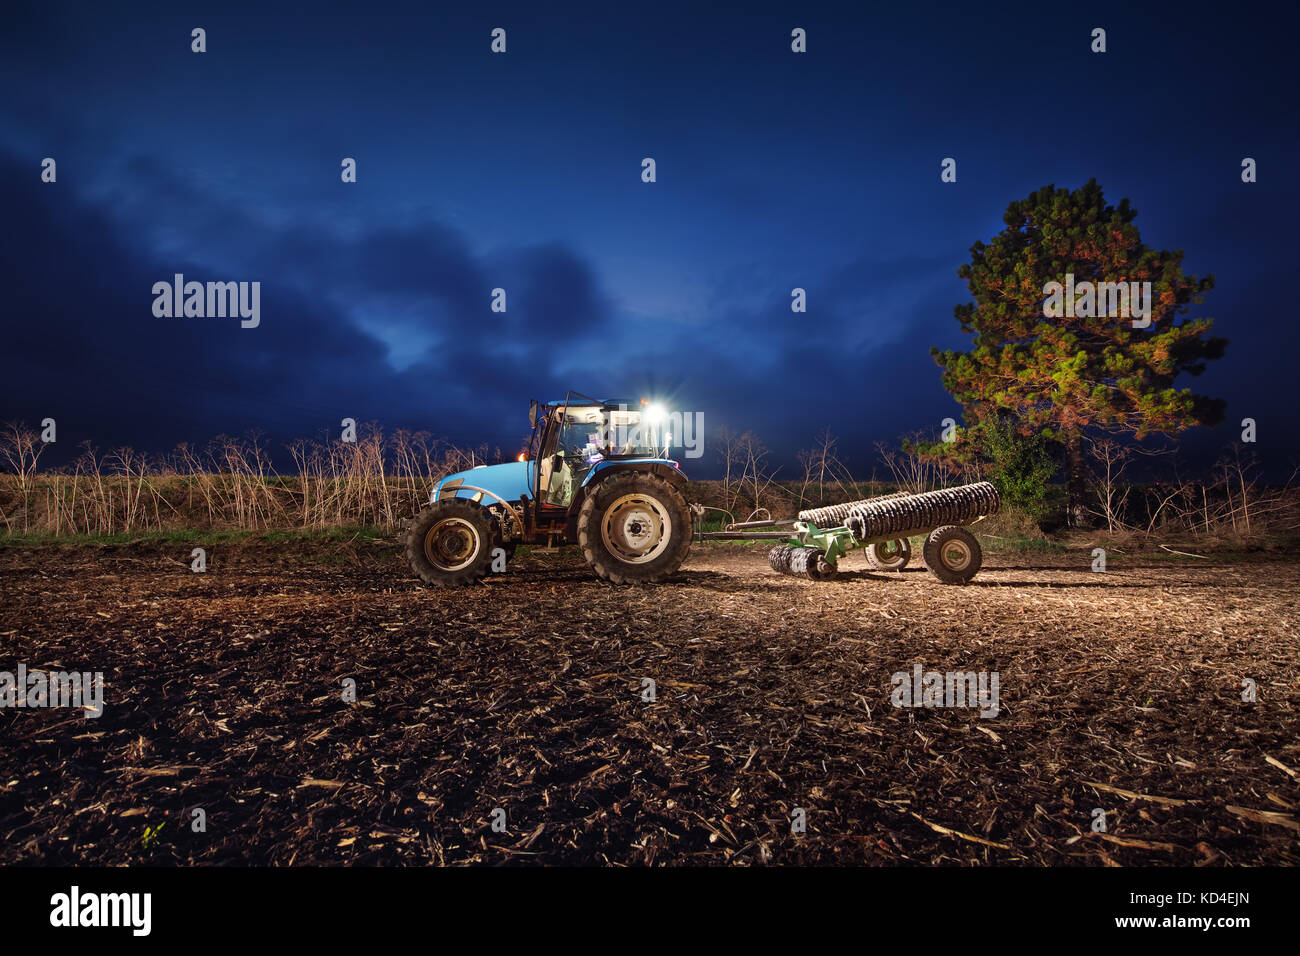 Traktor Vorbereitung land mit saatbeet Kultivator bei Nacht Stockfoto